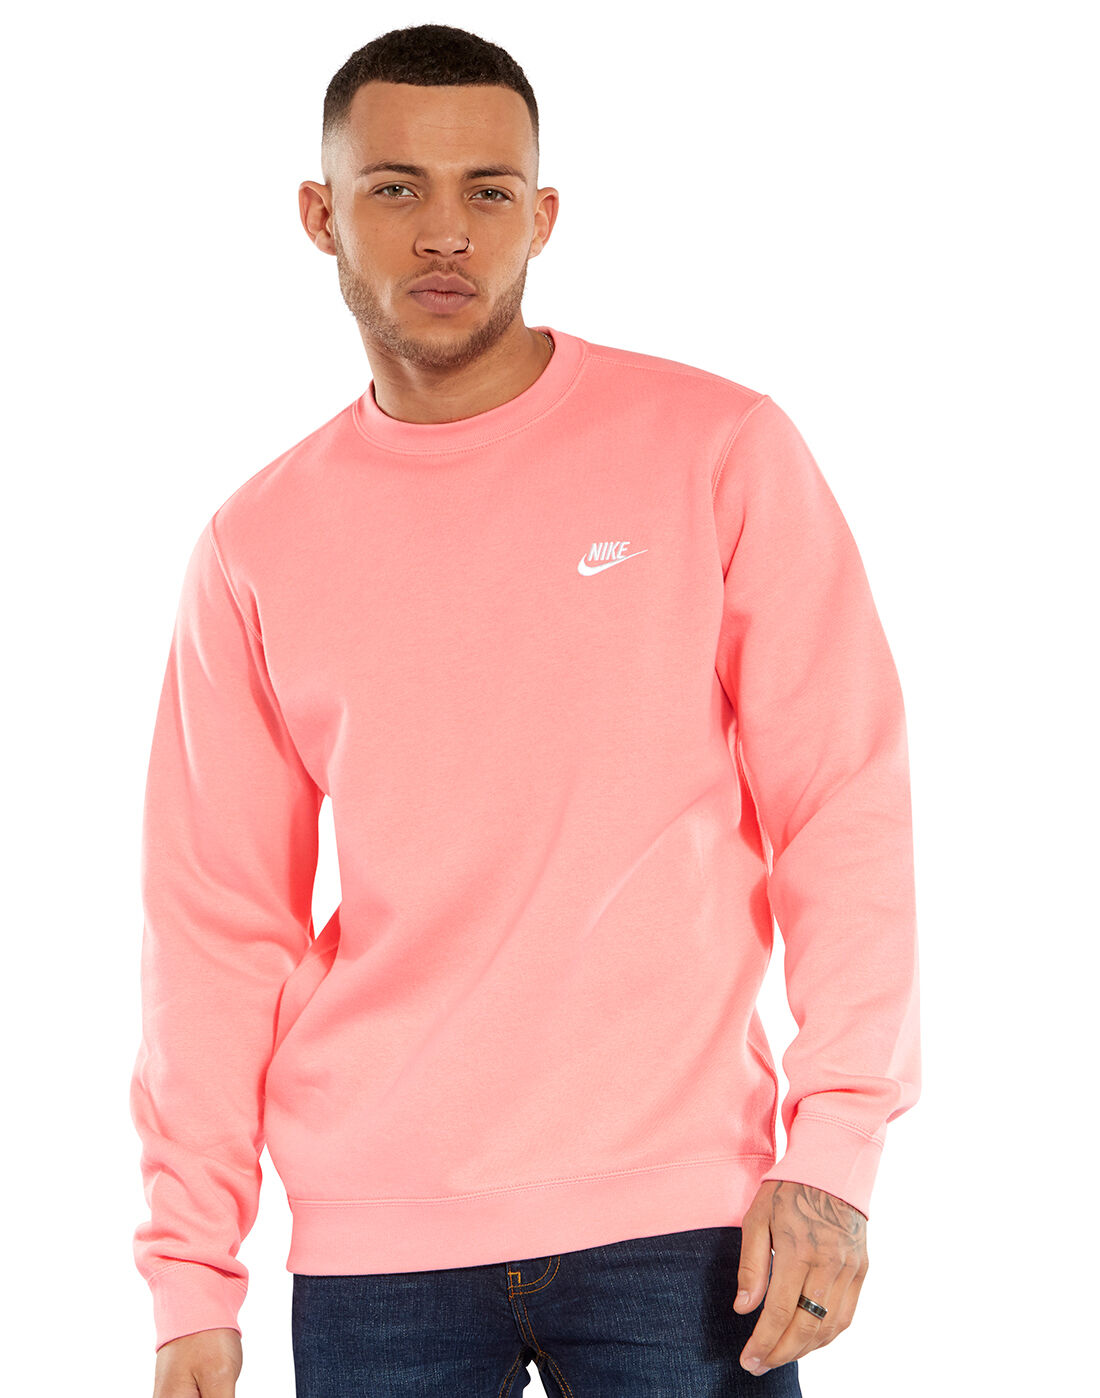 light pink nike sweatshirt